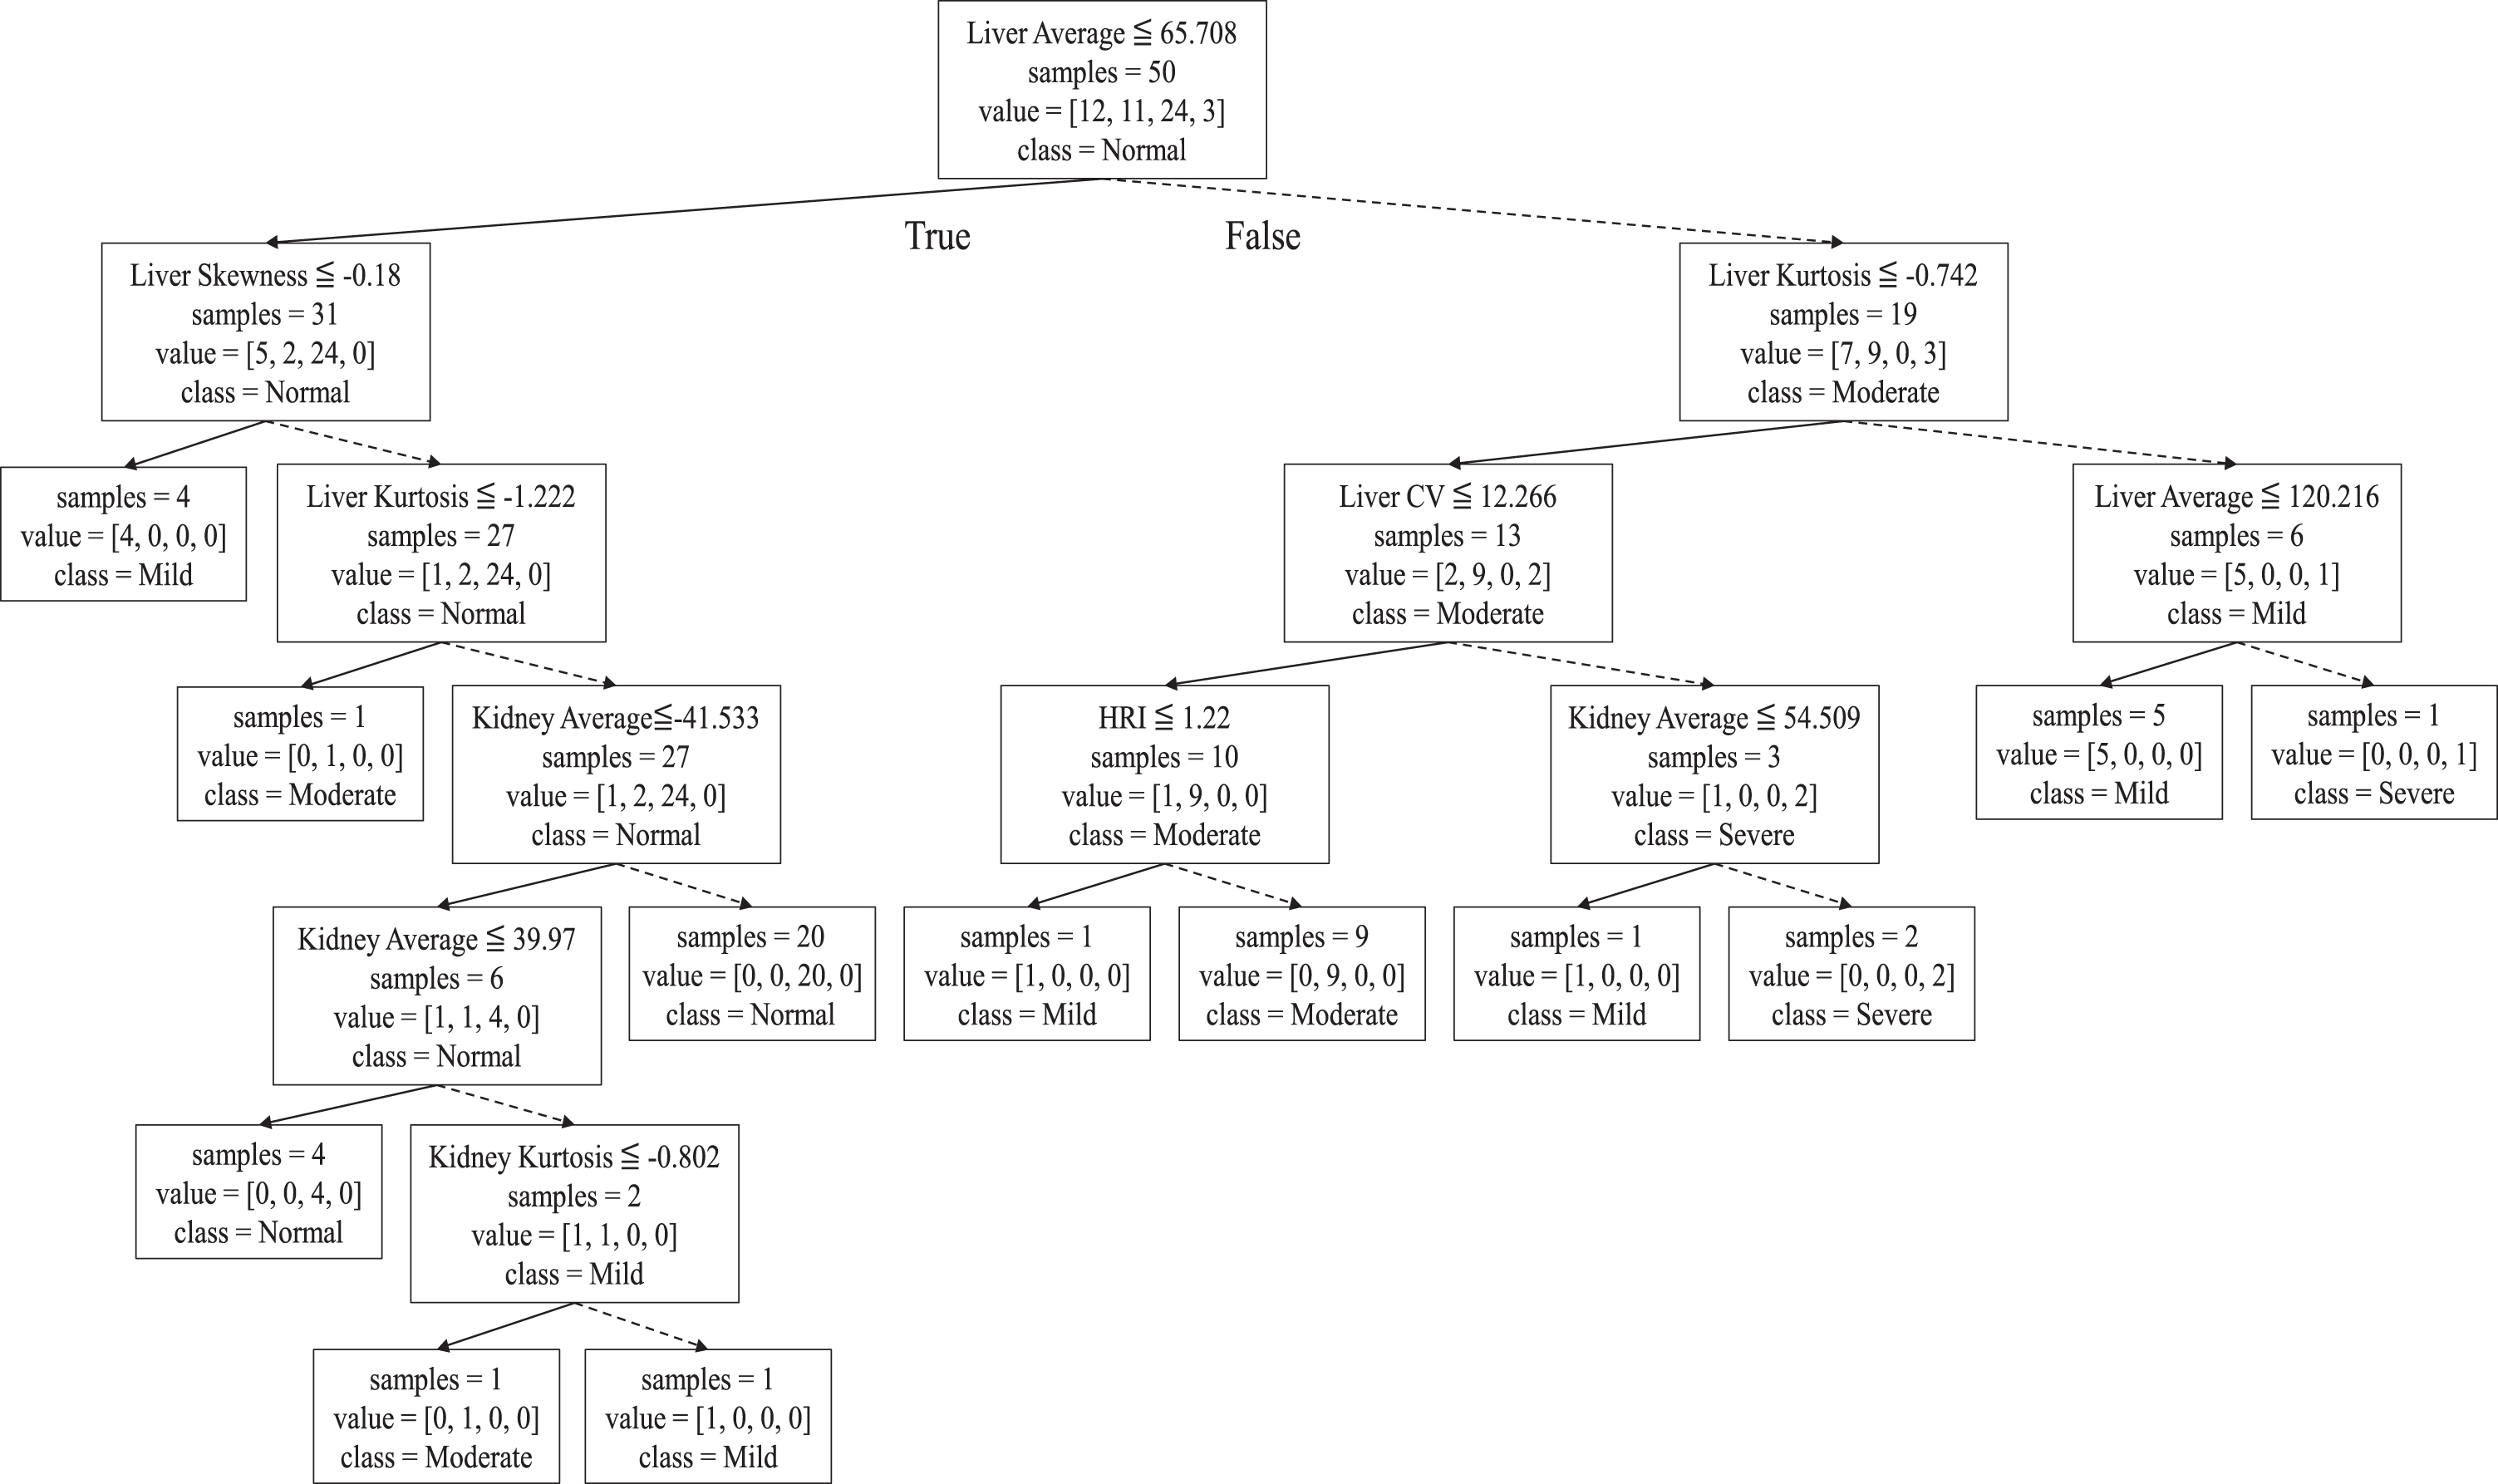 Decision tree to decide fatty liver severity classification.